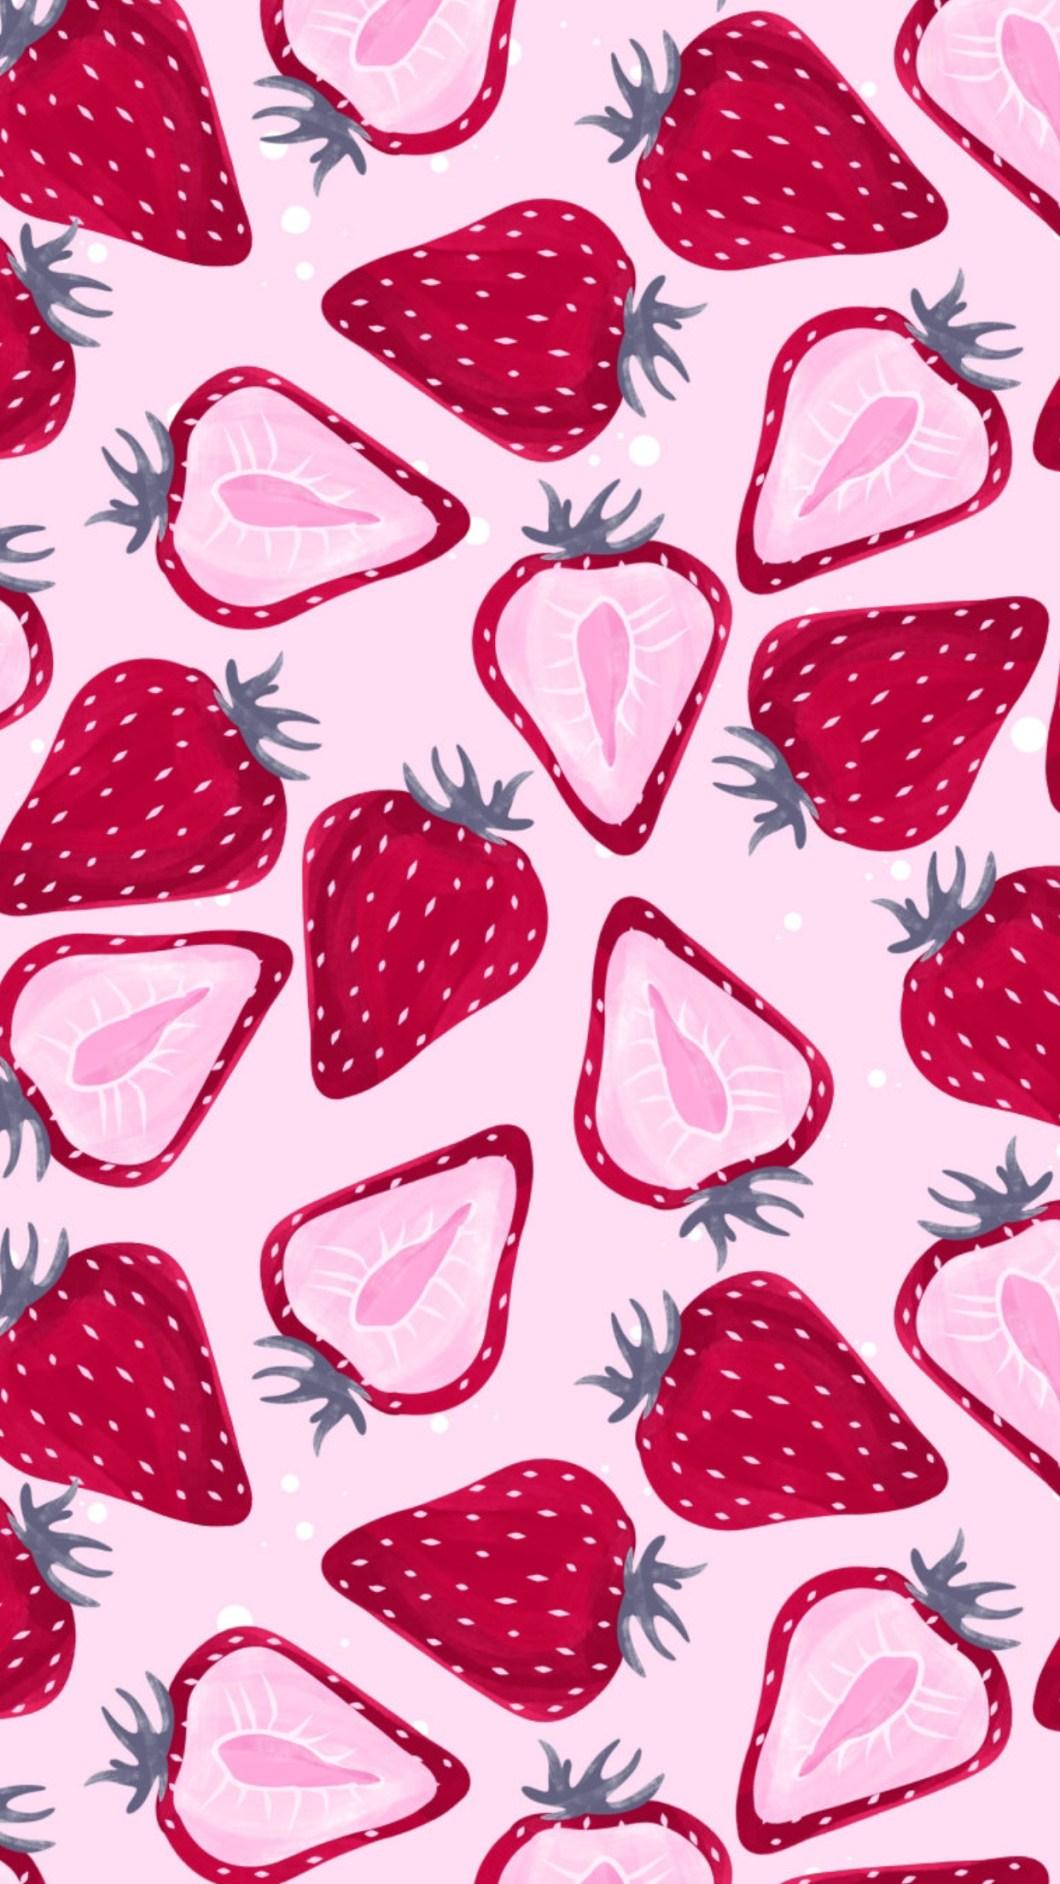 Kawaii Strawberry iPhone Wallpapers - Top Free Kawaii Strawberry iPhone ...